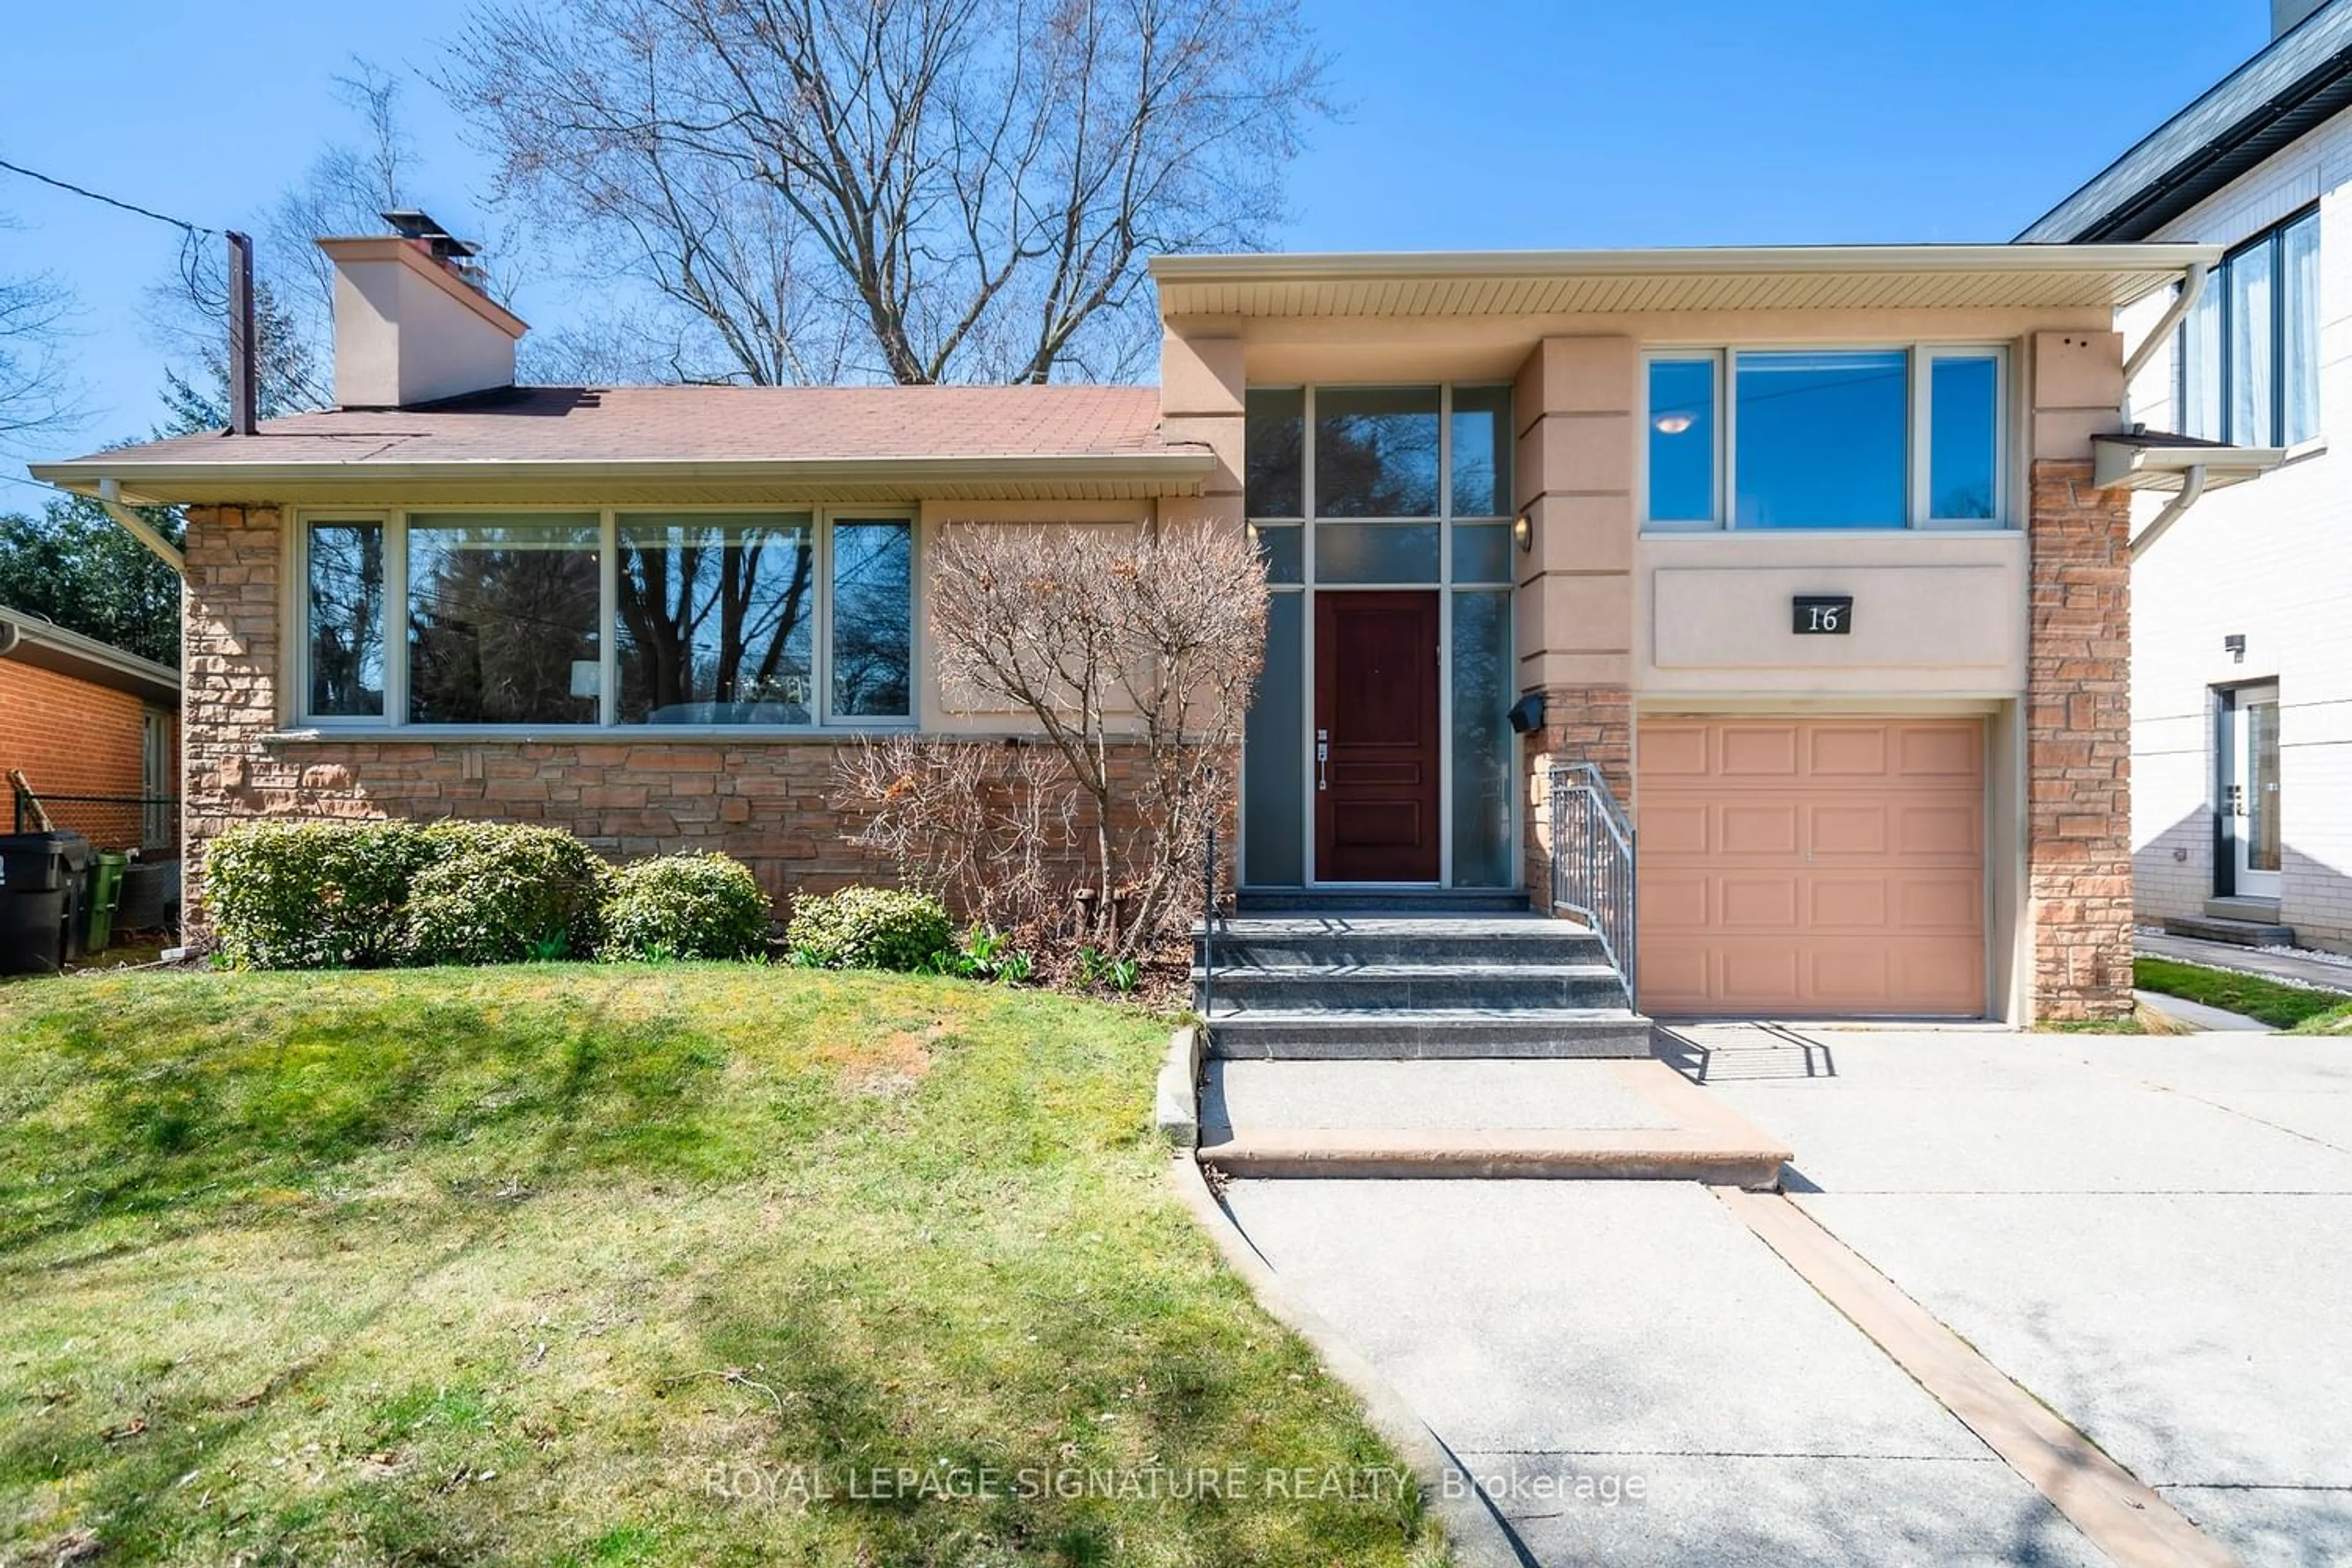 Home with brick exterior material for 16 Palomino Cres, Toronto Ontario M2K 1W1